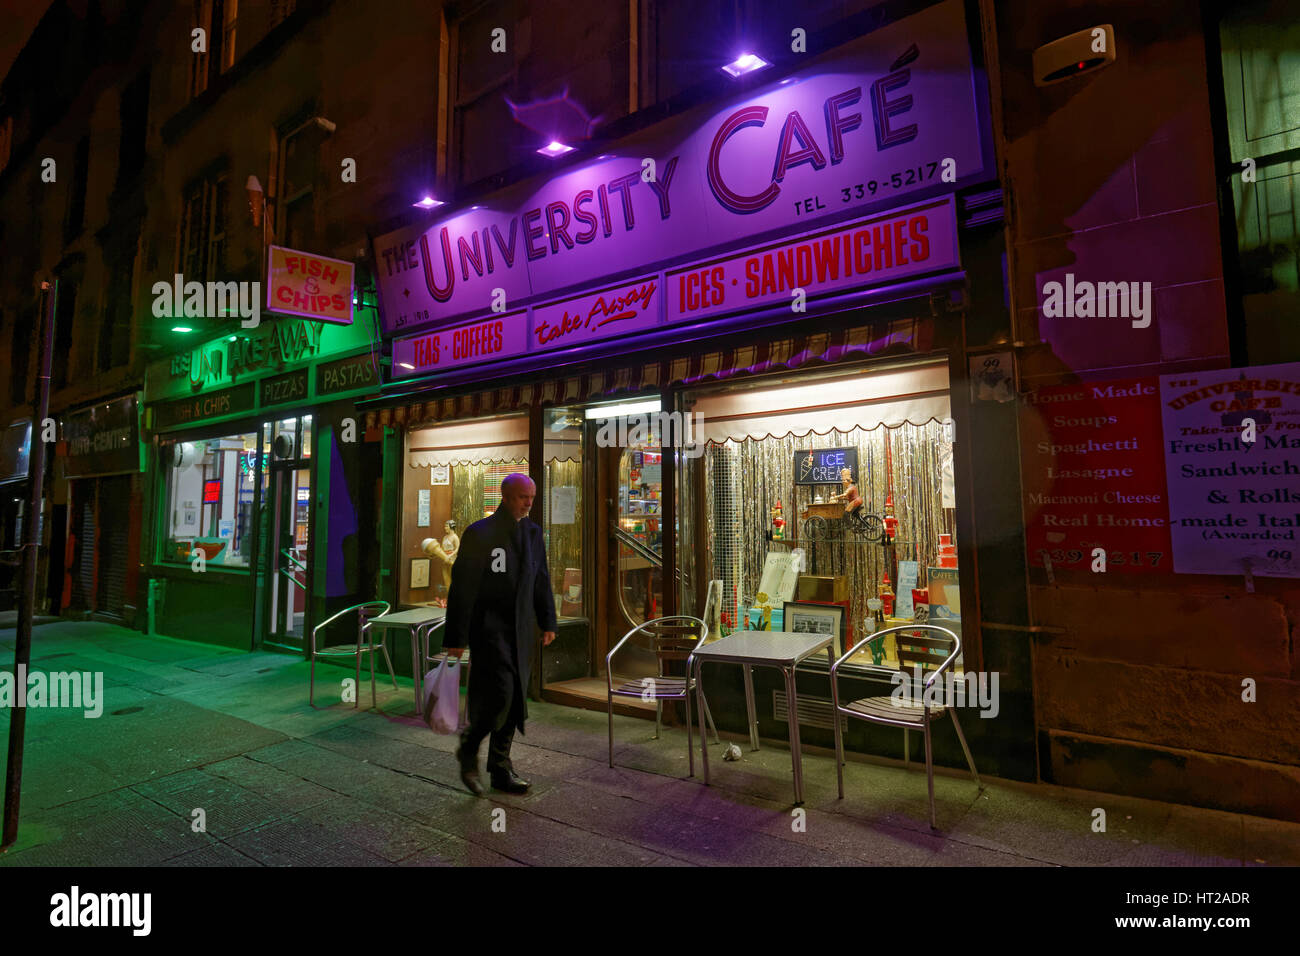 university cafe byres road Glasgow late night evening Stock Photo